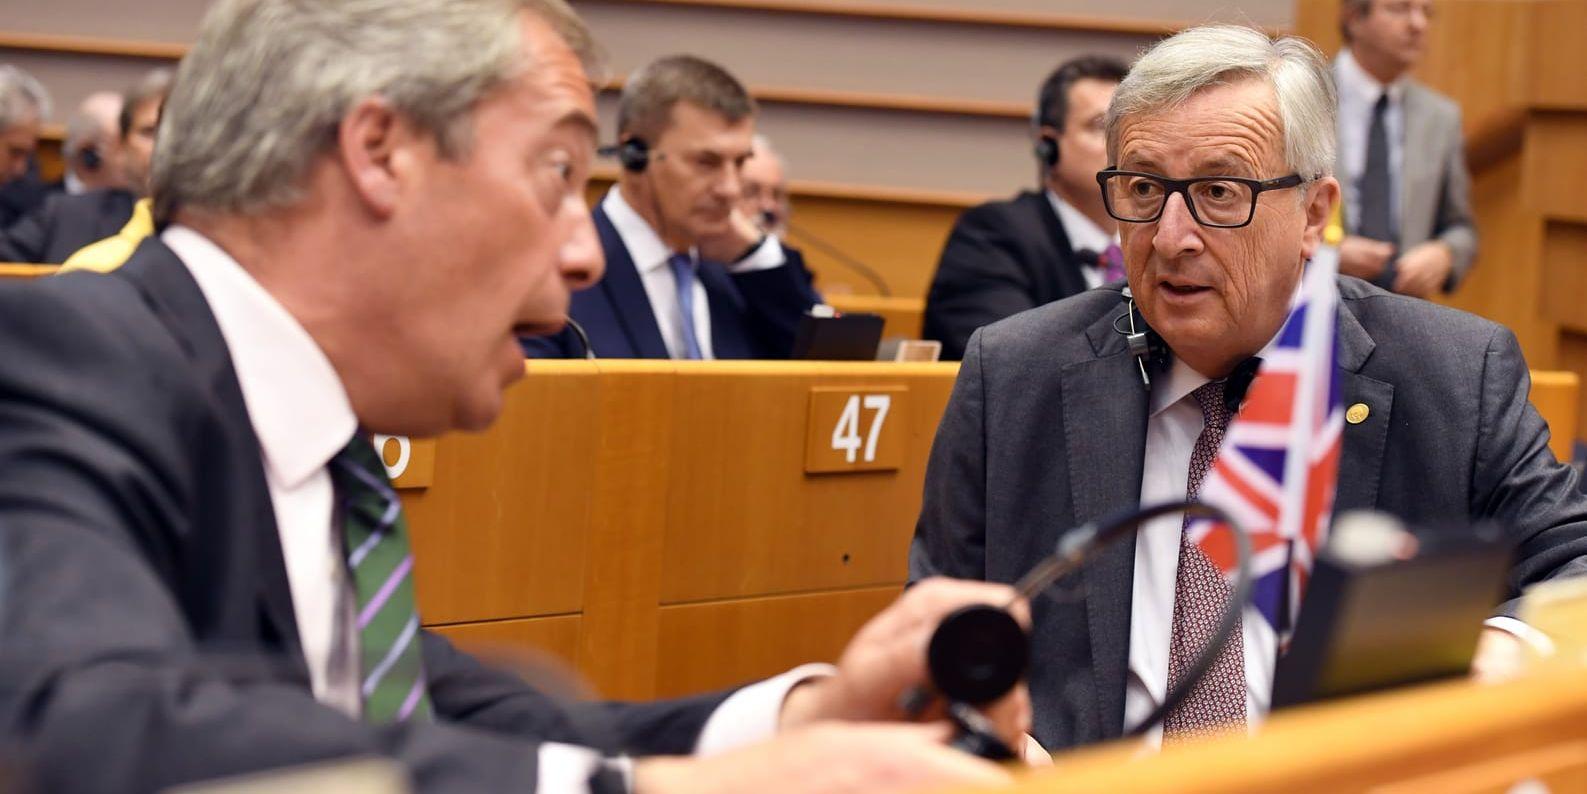 Jean-Claude Juncker och Nigel Farage under dagens möte i Europaparlamentet.